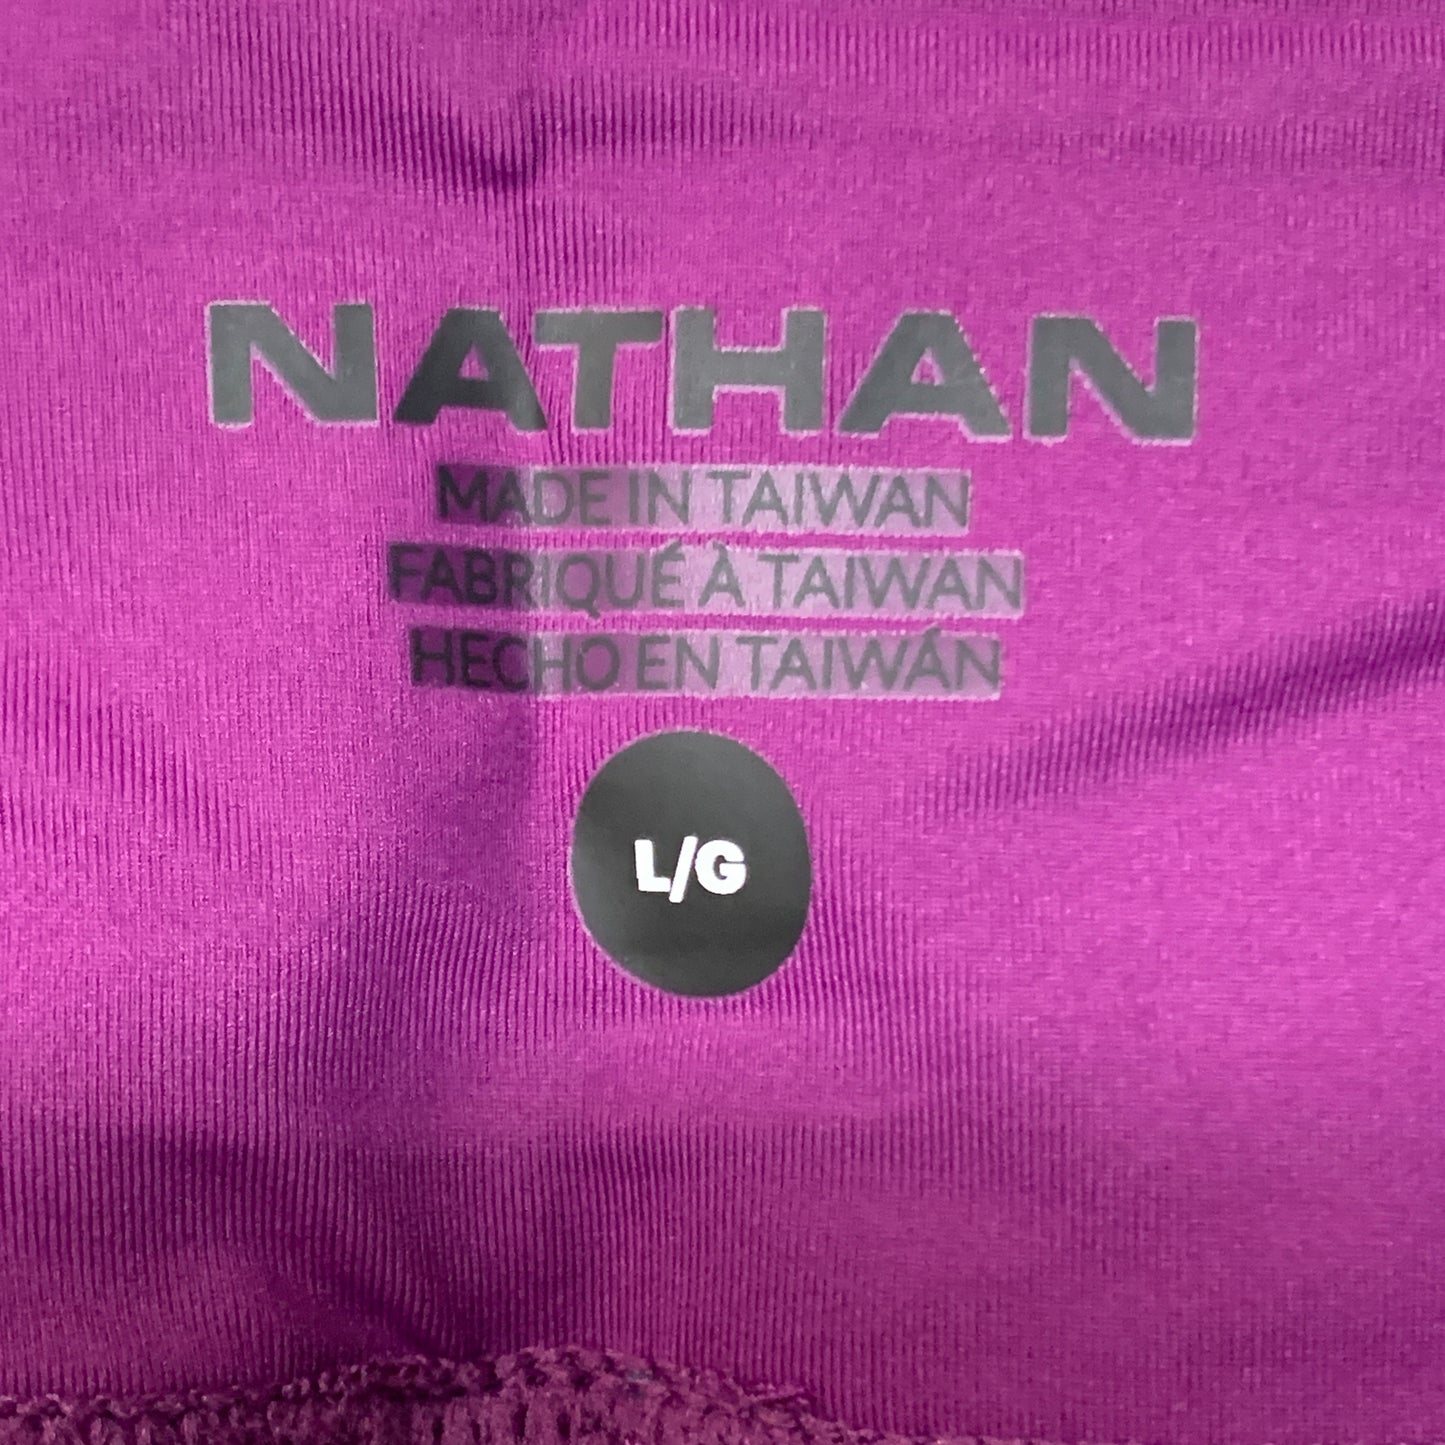 NATHAN Interval 6" Inseam Bike Short Women's Plum Size L NS51520-70030-L